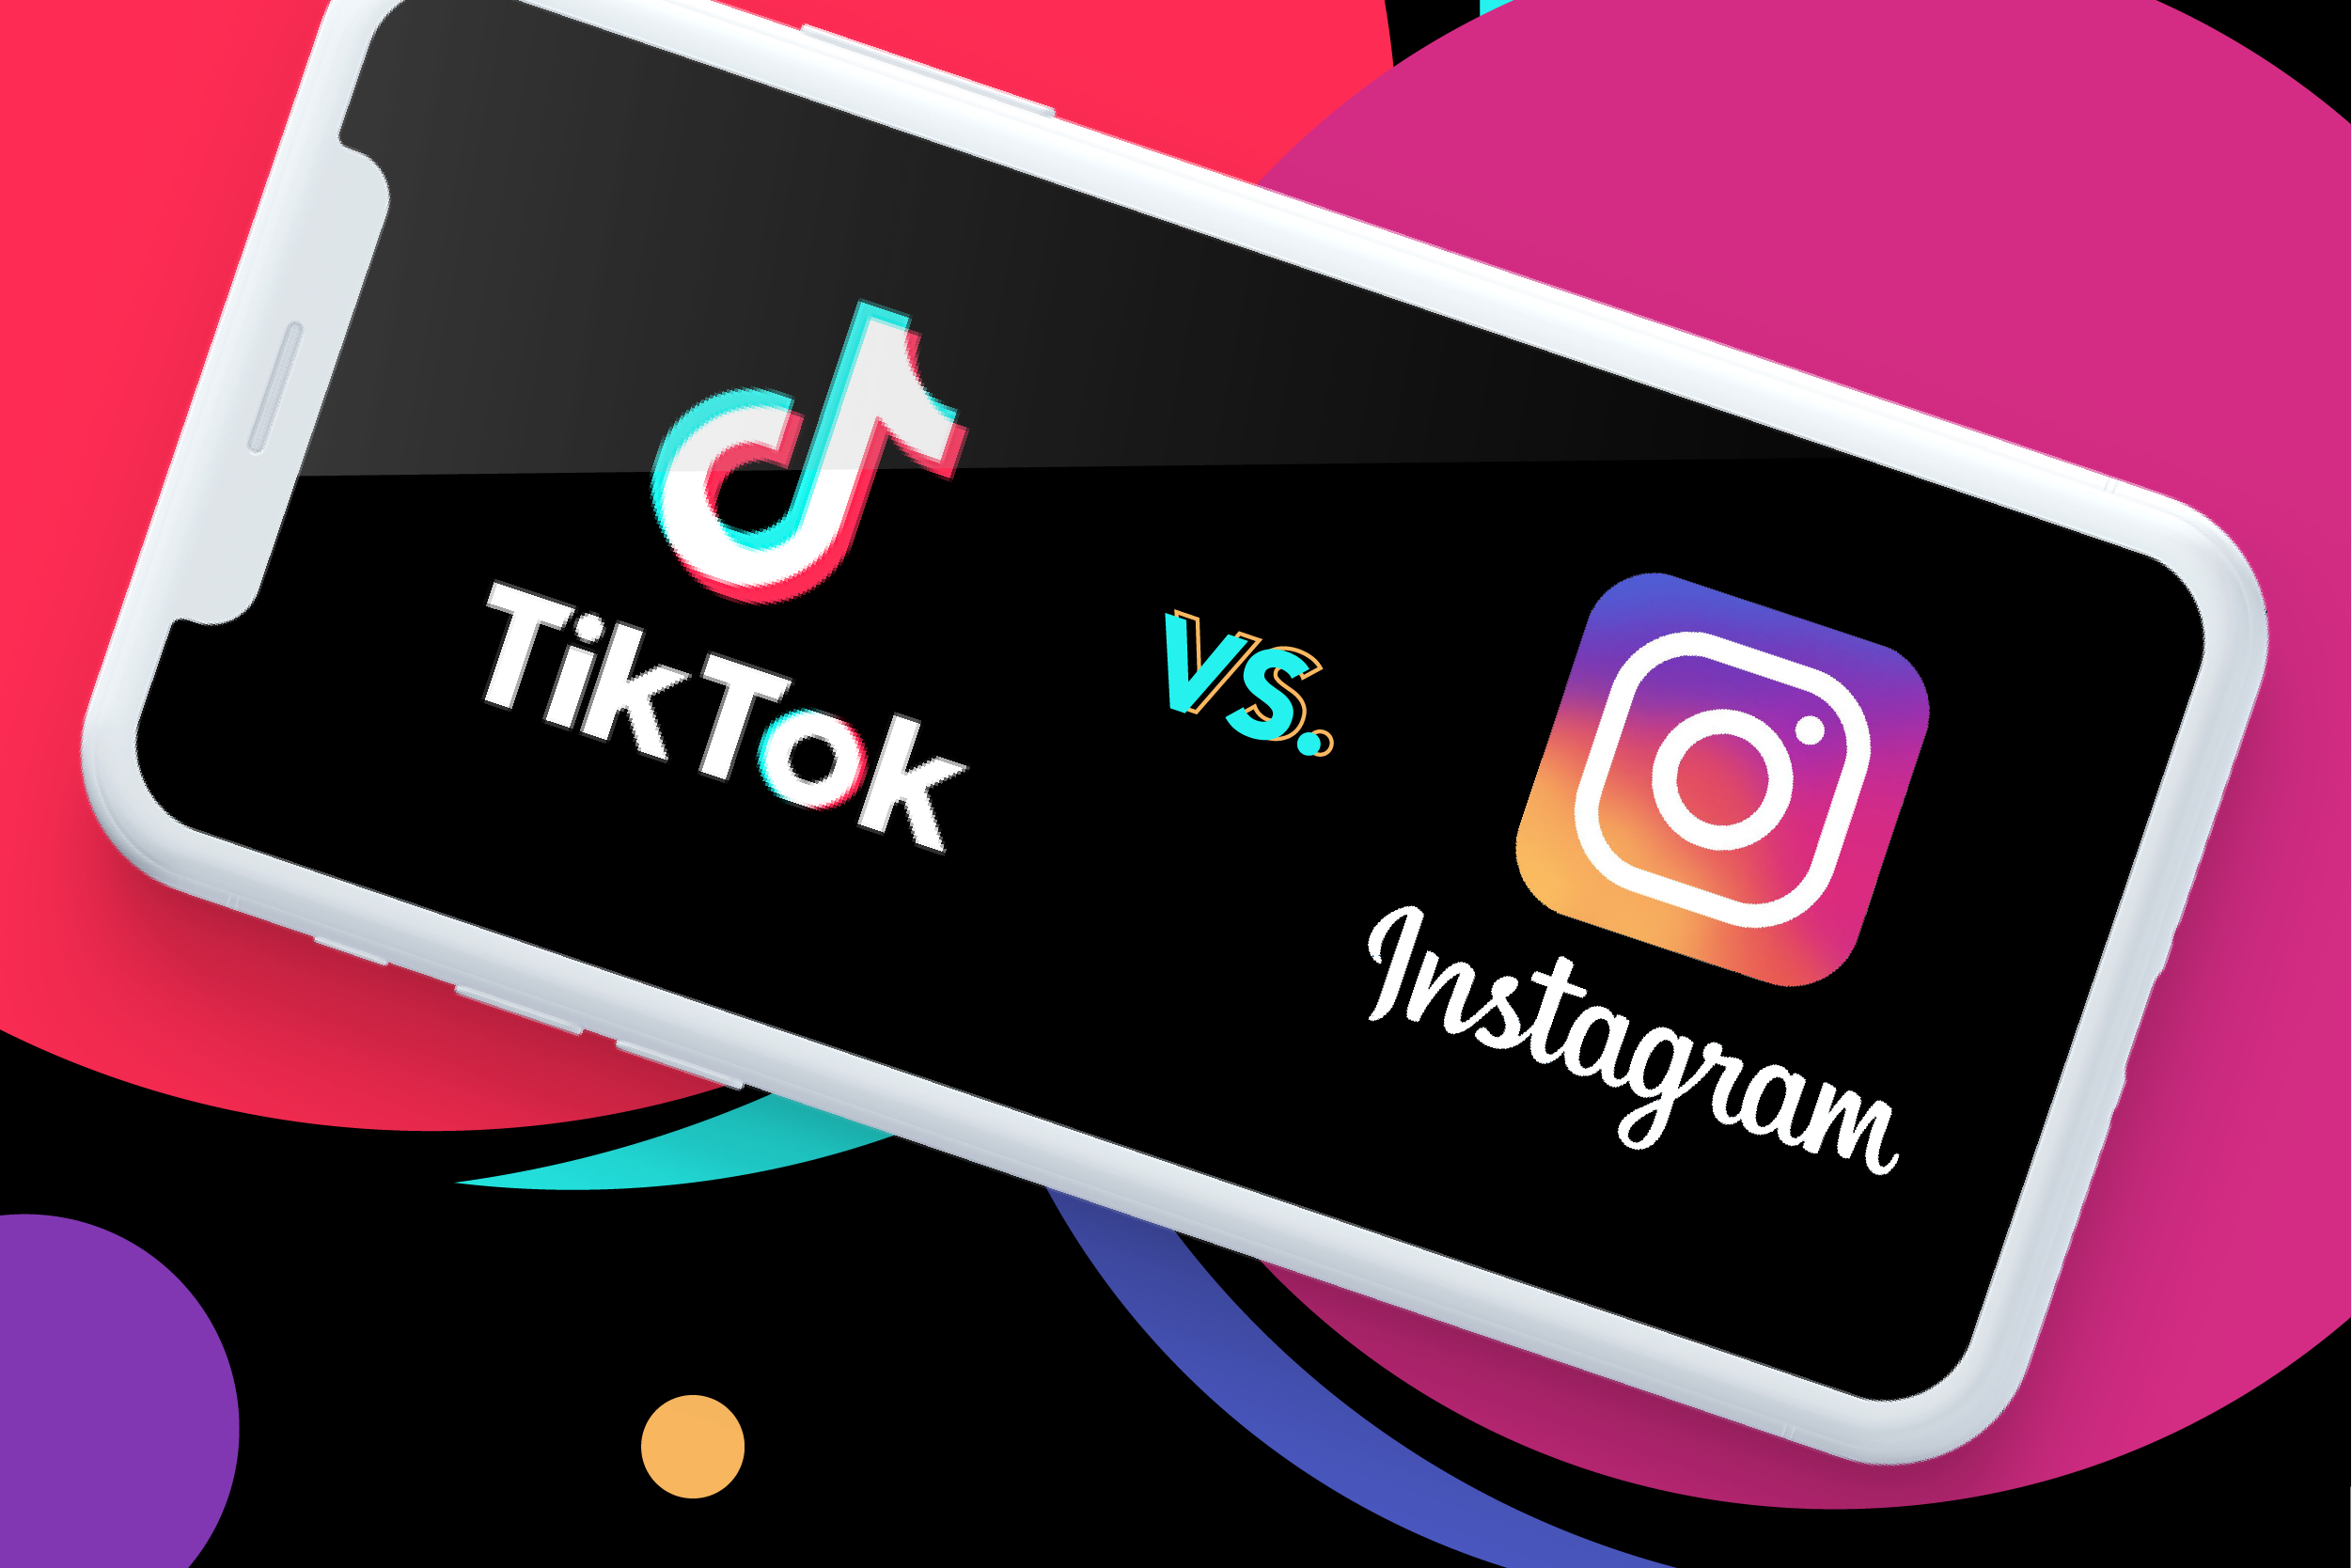 Tiktok Images For Instagram Highlights